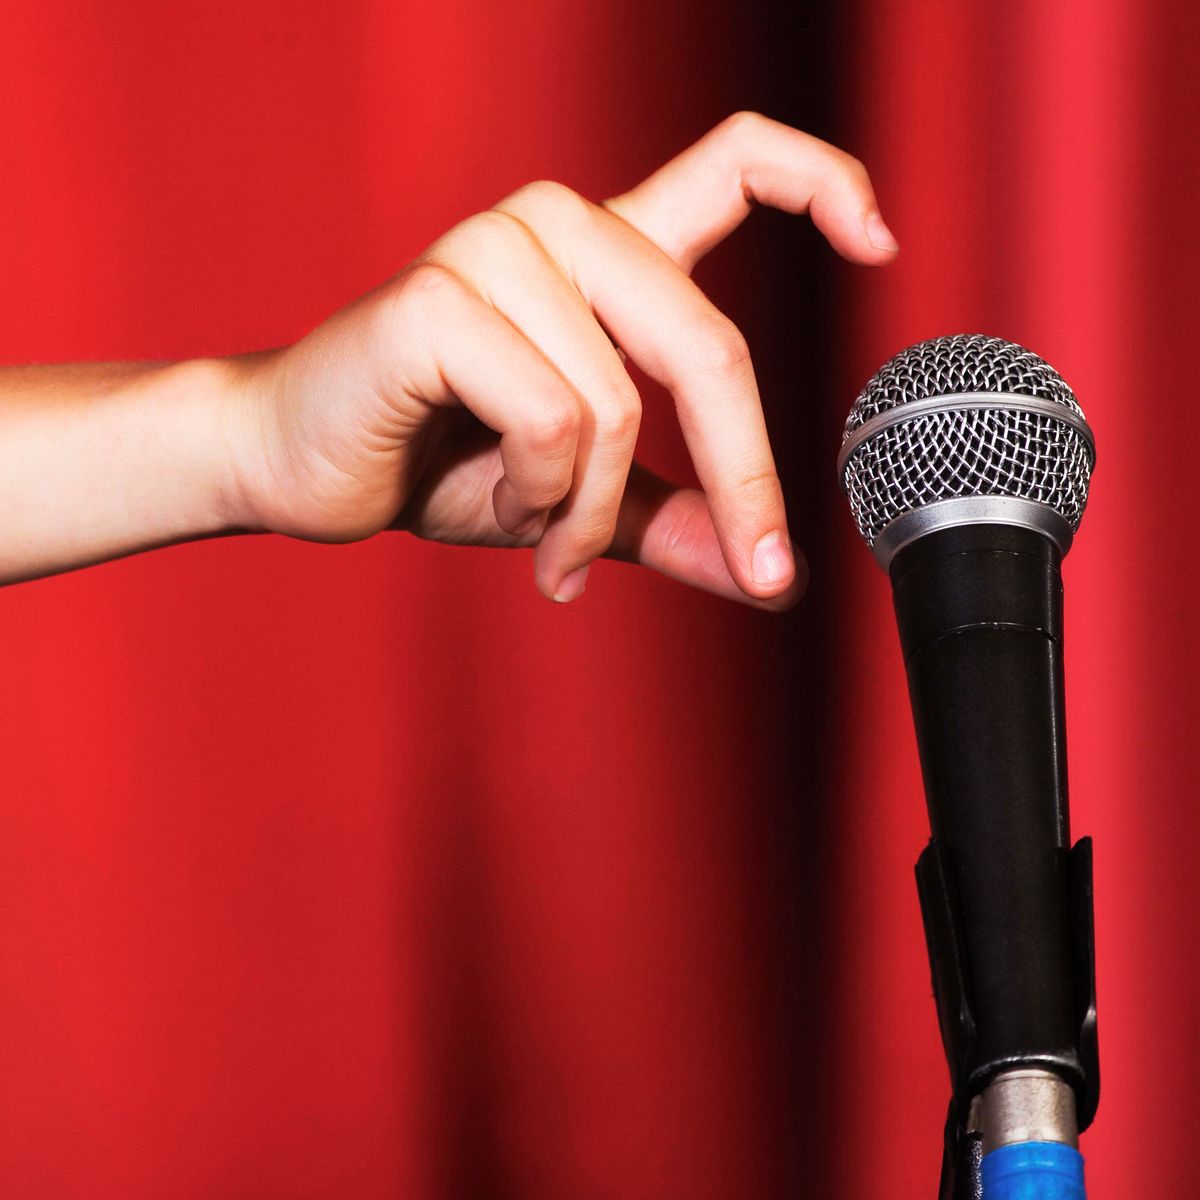 Включай микрофон текст. Пюпитр с микрофоном. Фото микрофона с текстом. Wearable Microphone. Официальное слово микрофон рука.